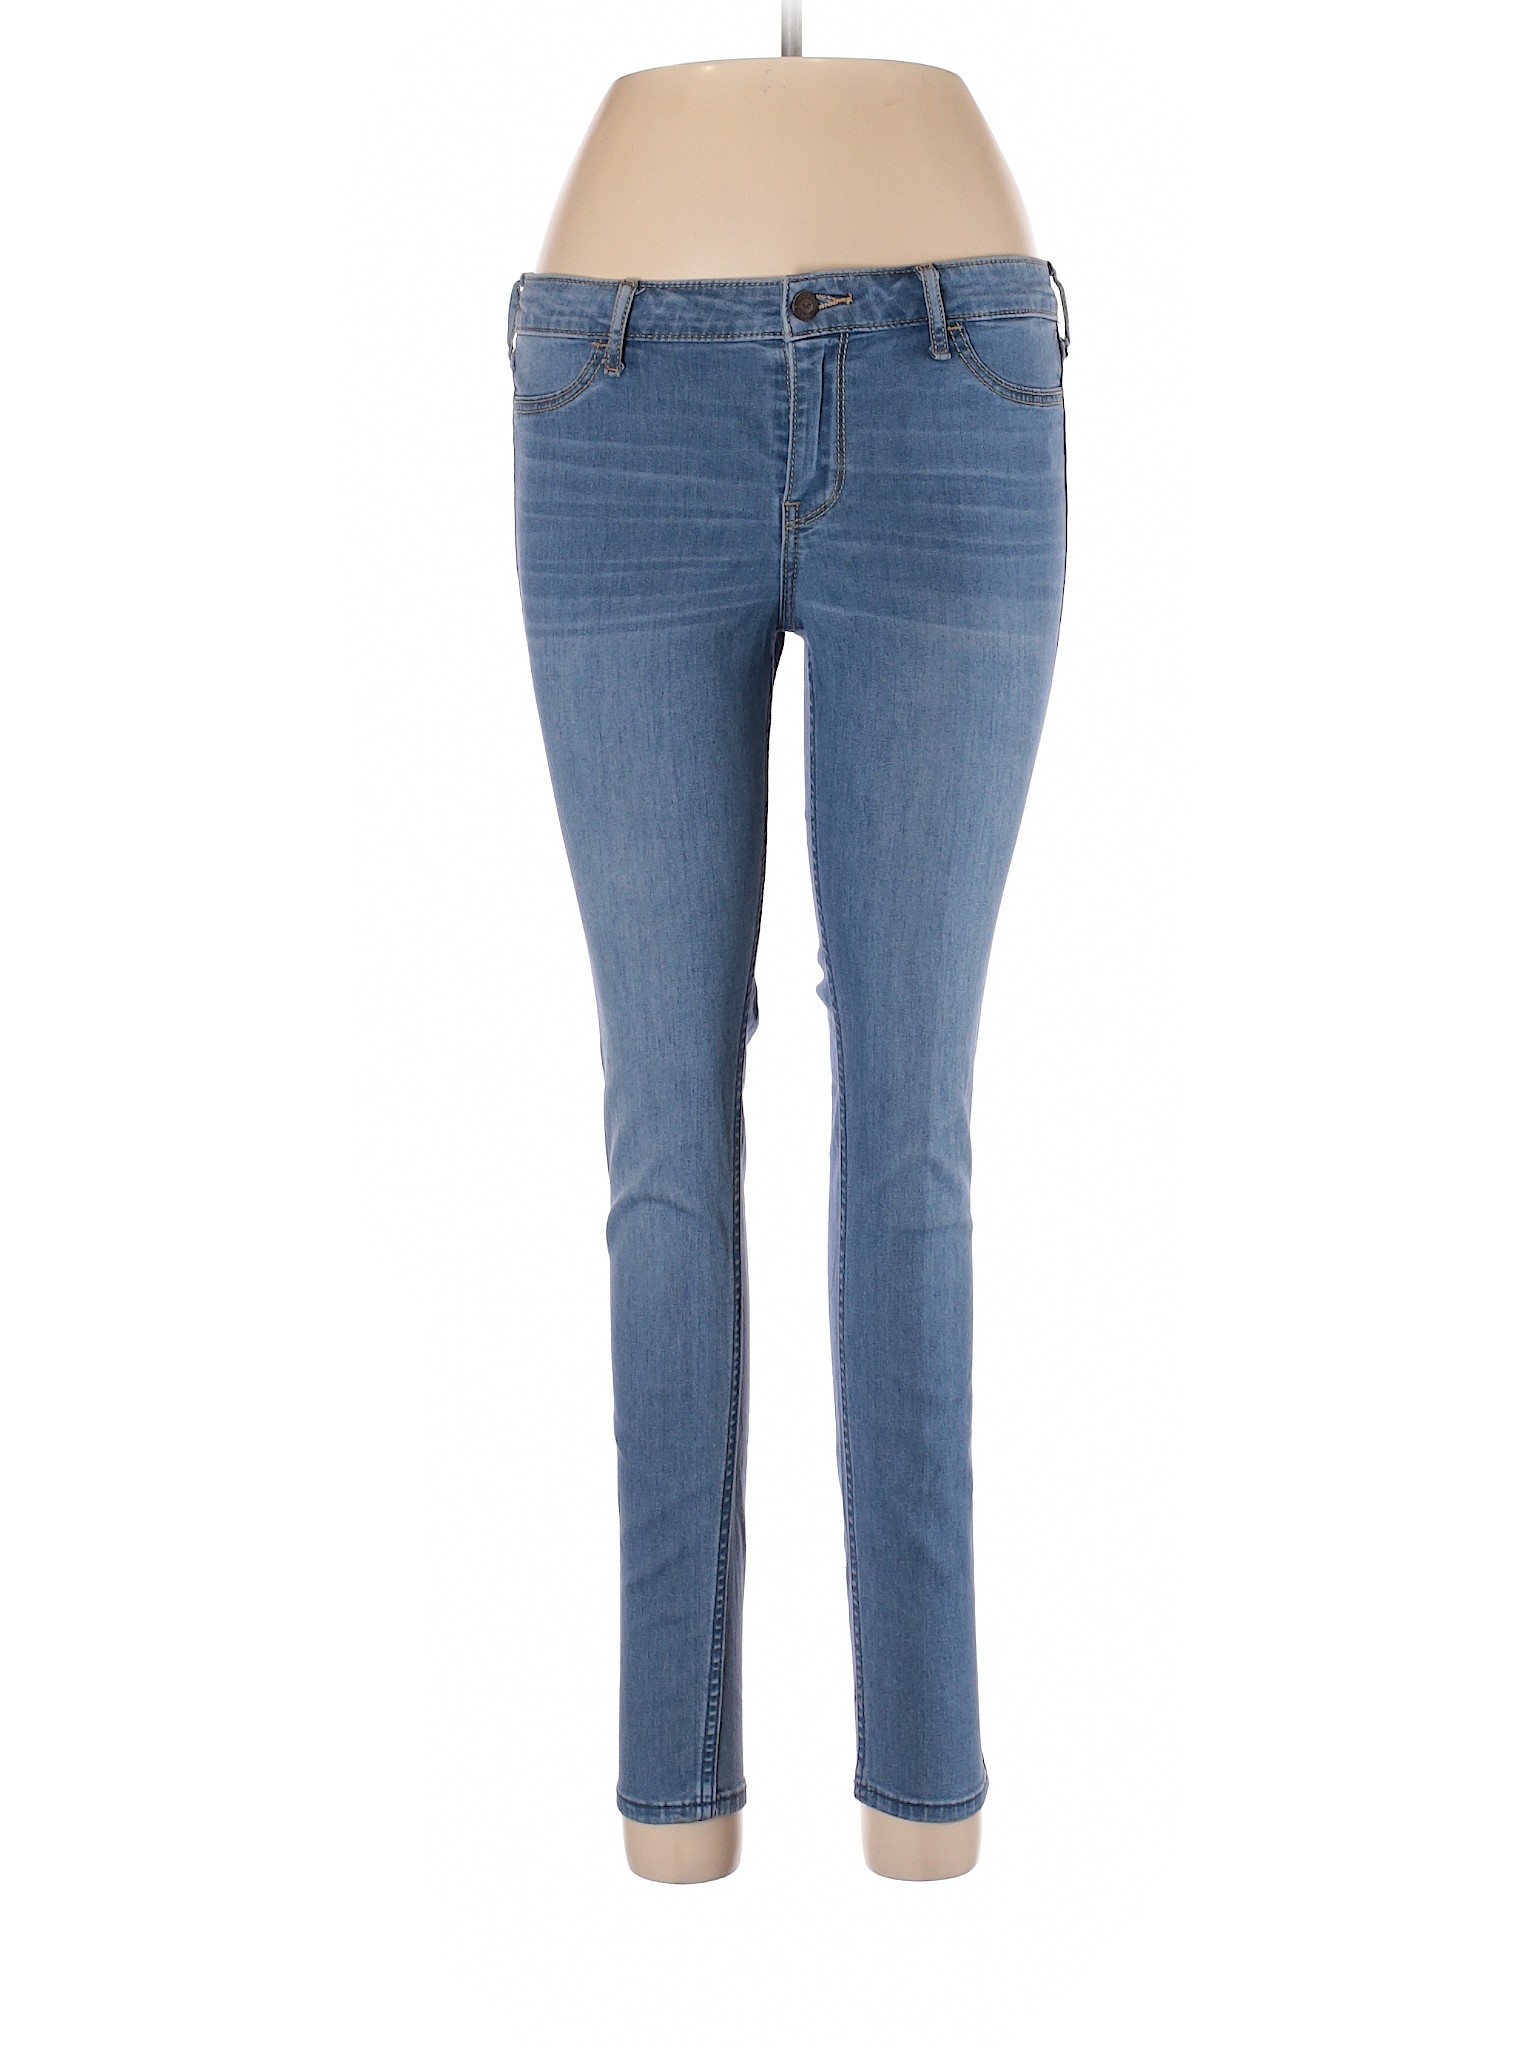 Hollister Jeans Inseam Chart